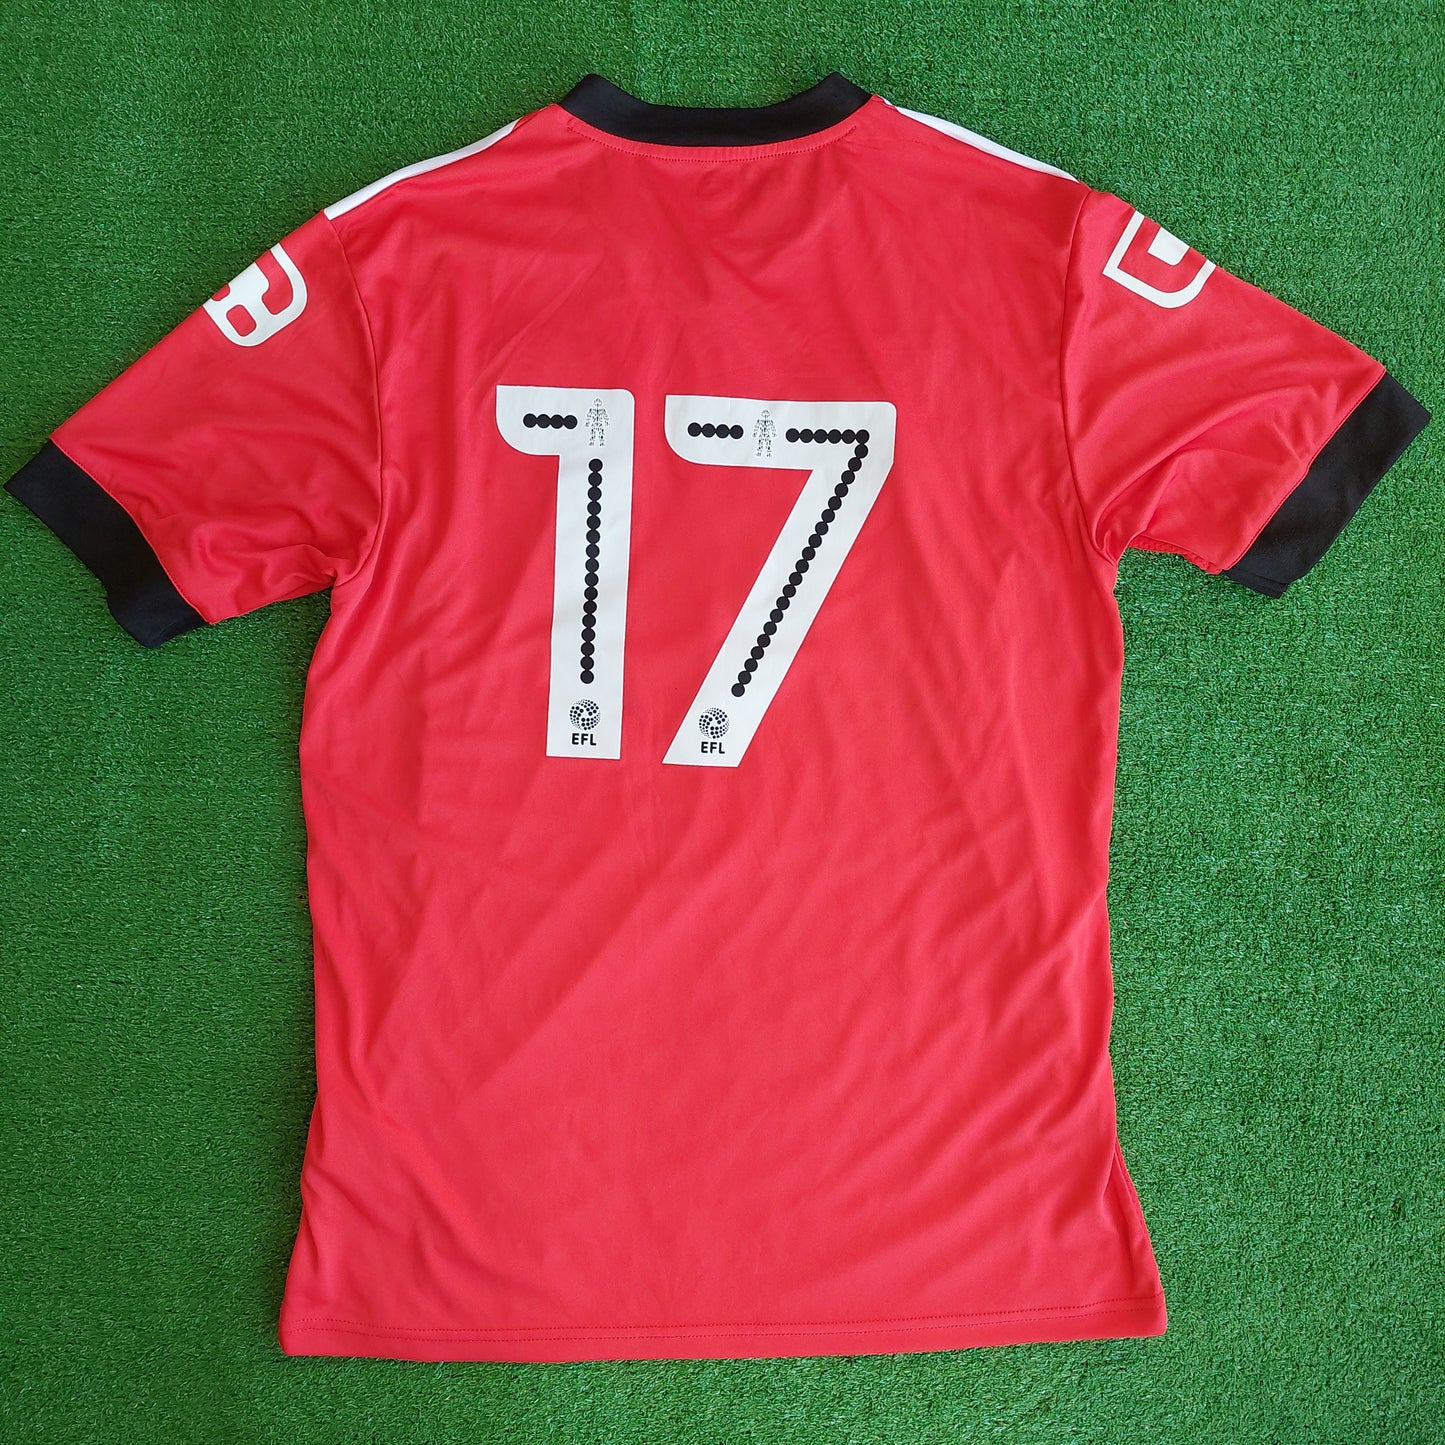 Crewe Alexandra 2016/17 Home Shirt (Excellent) - Size L